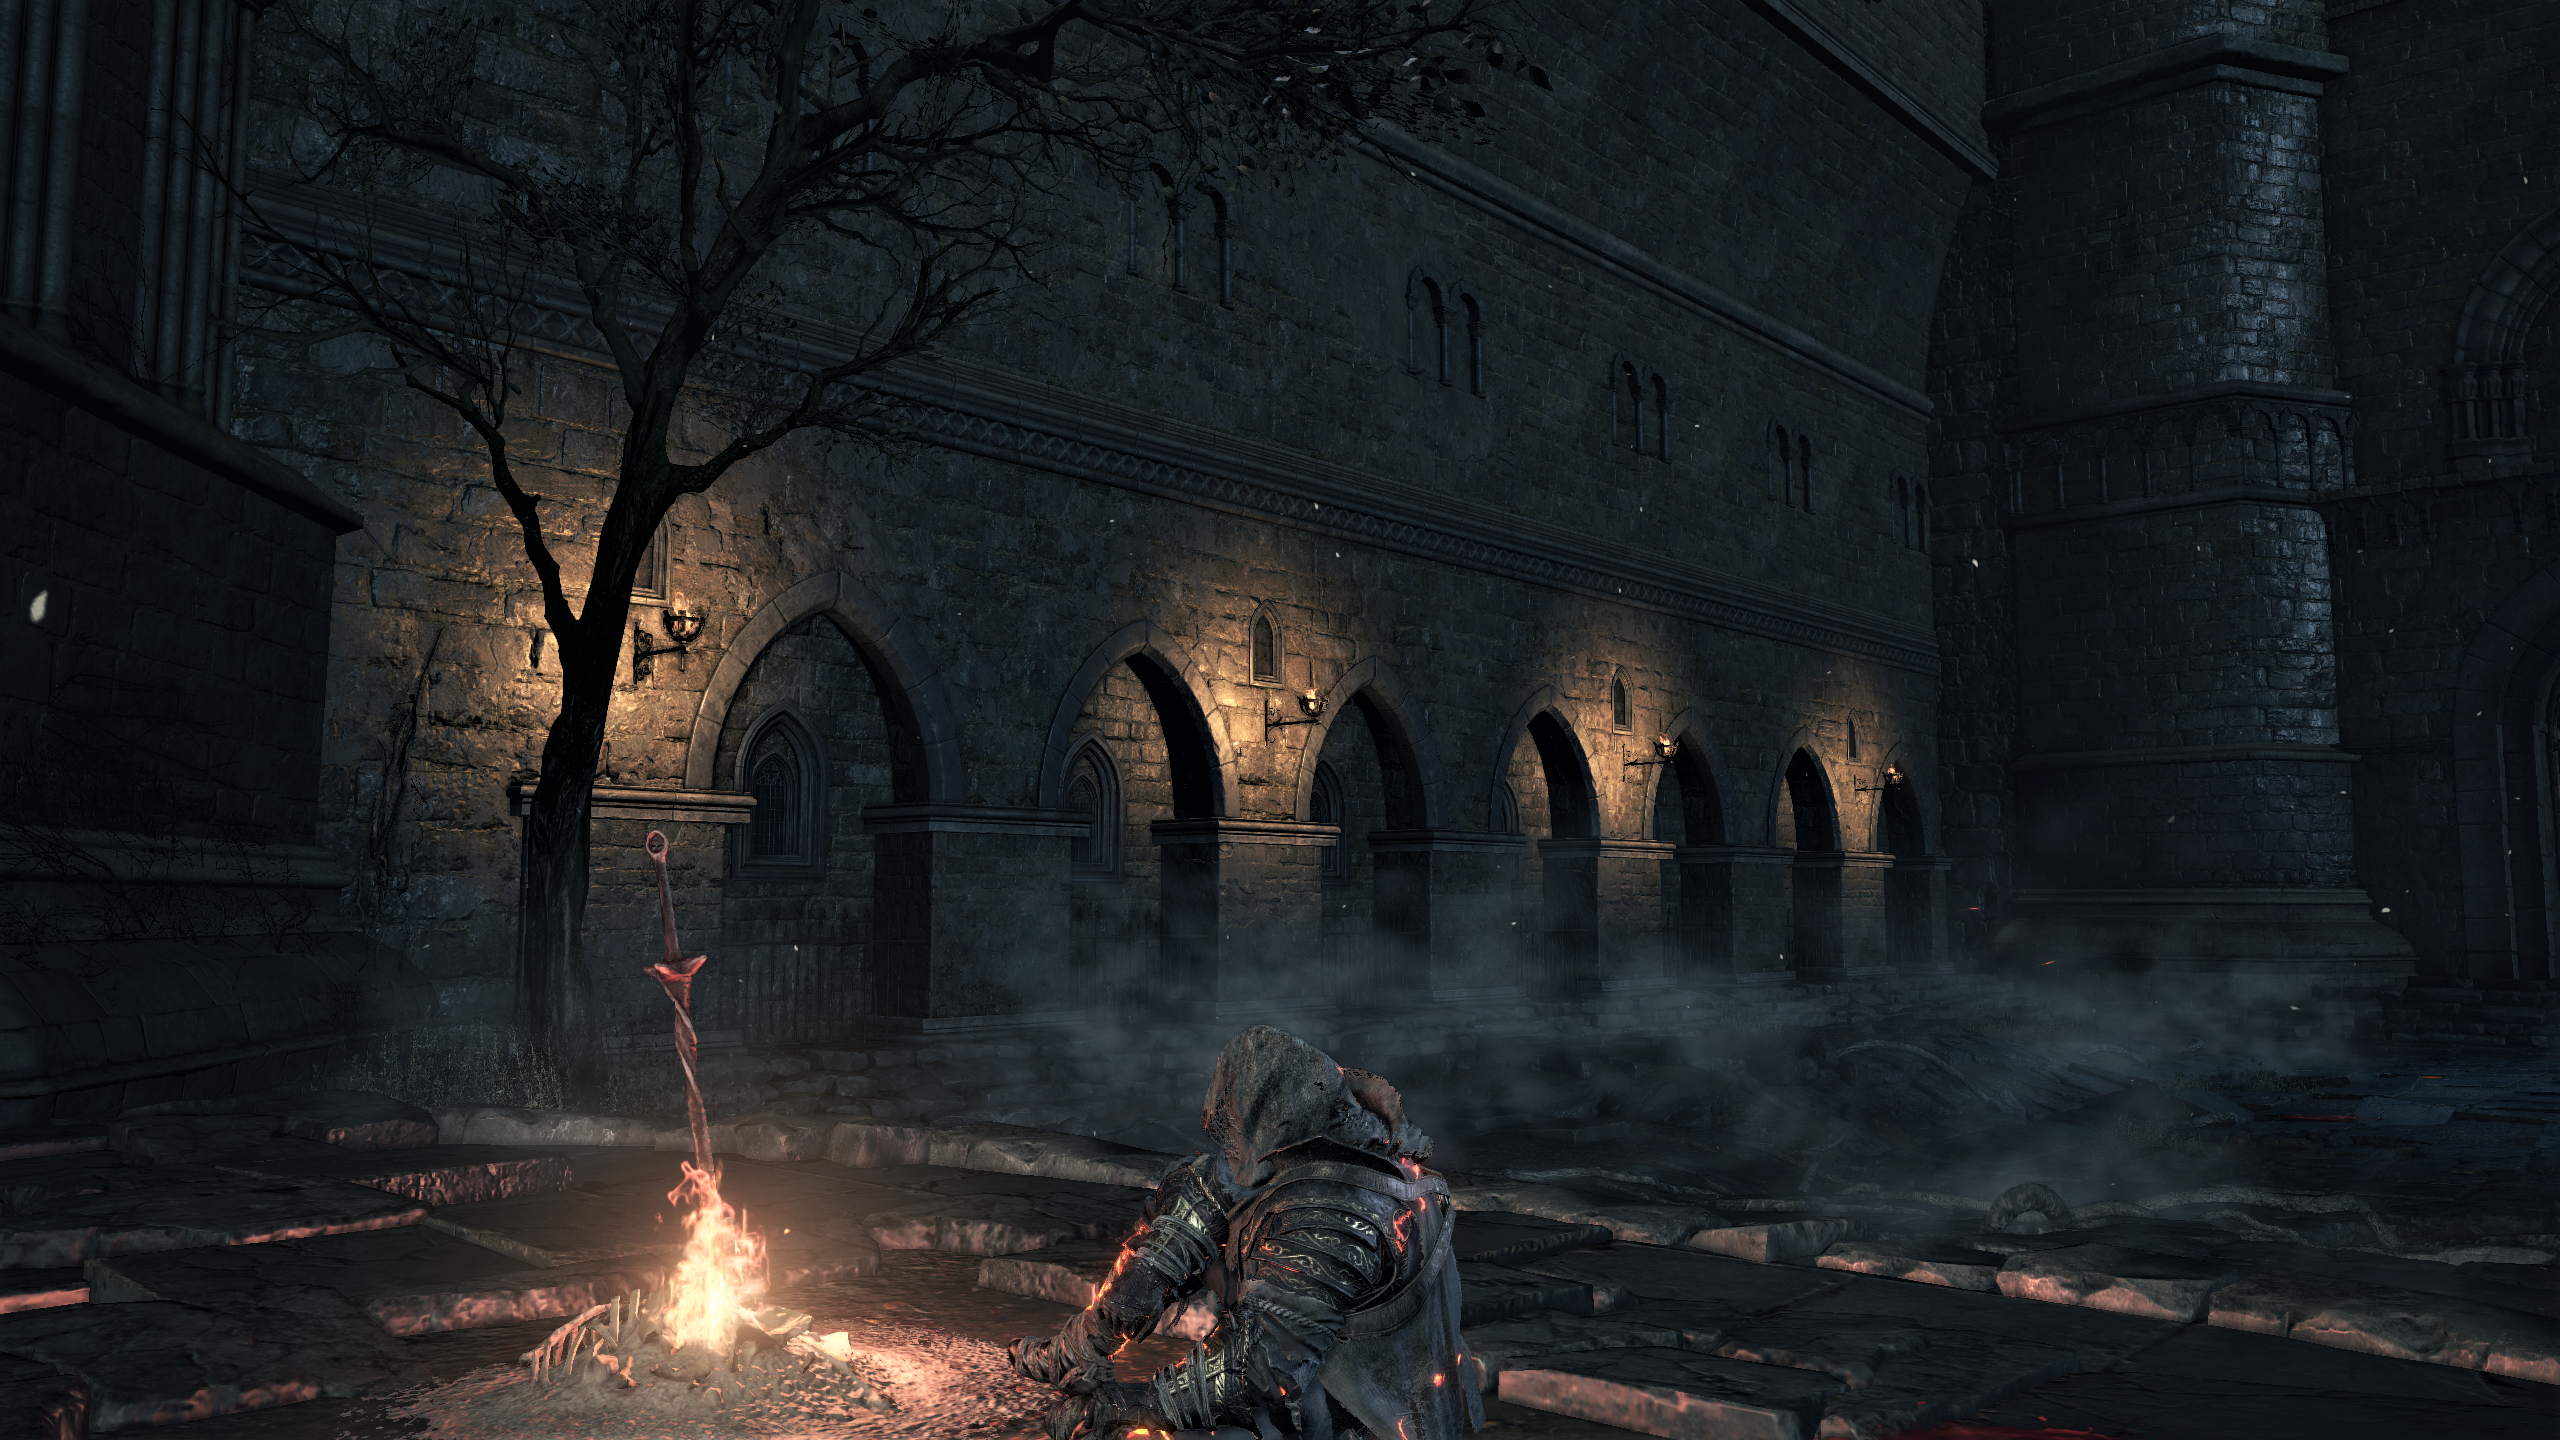 General 2560x1440 Dark Souls Dark Souls III bonfires vignette dark Vista dead trees video games